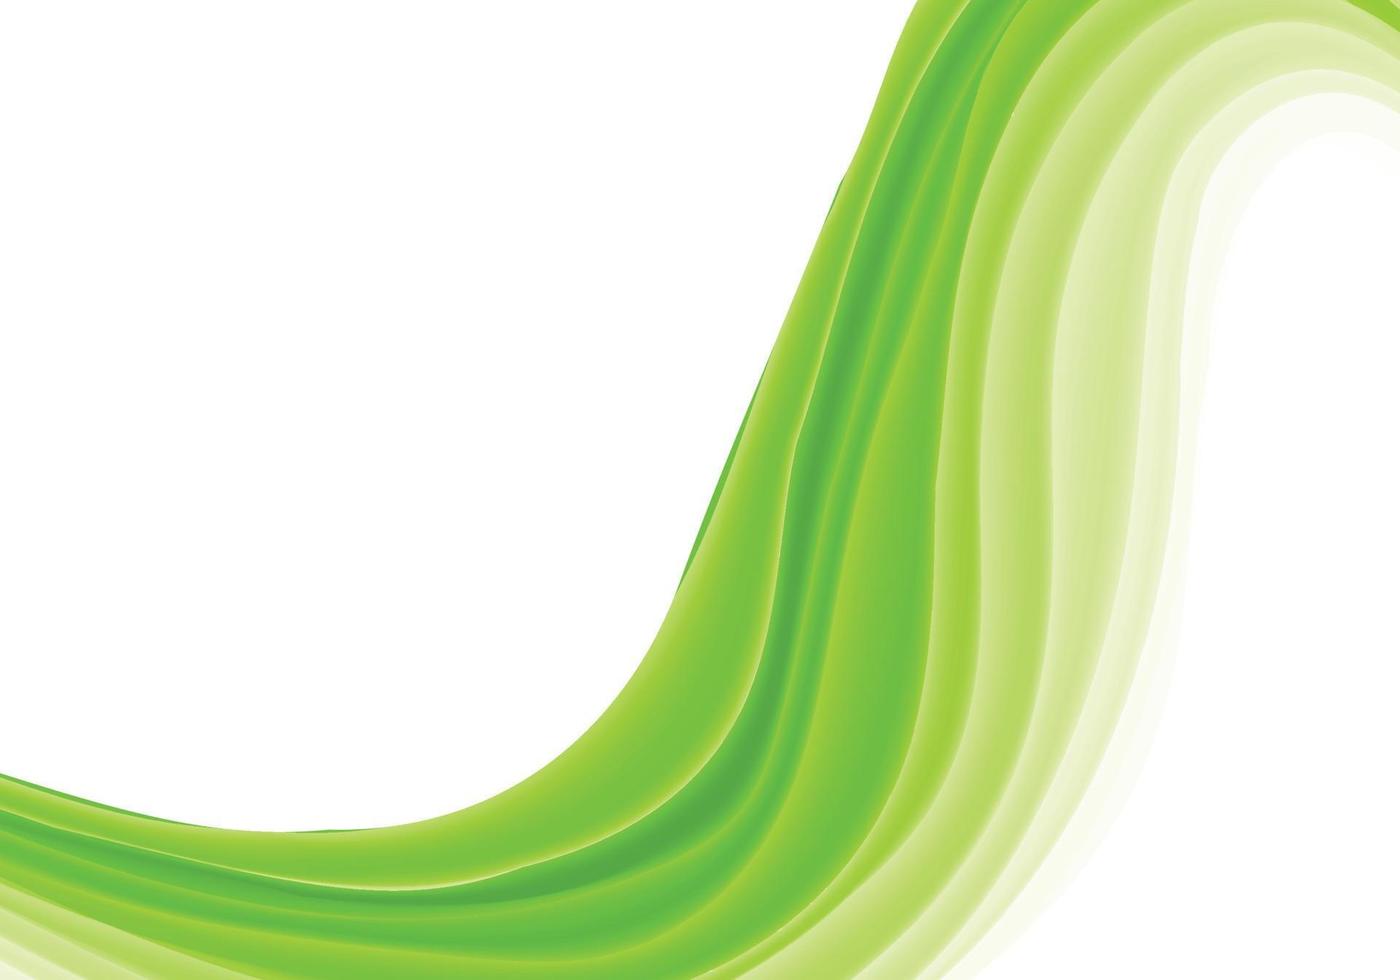 Modern flowing green wave background vector